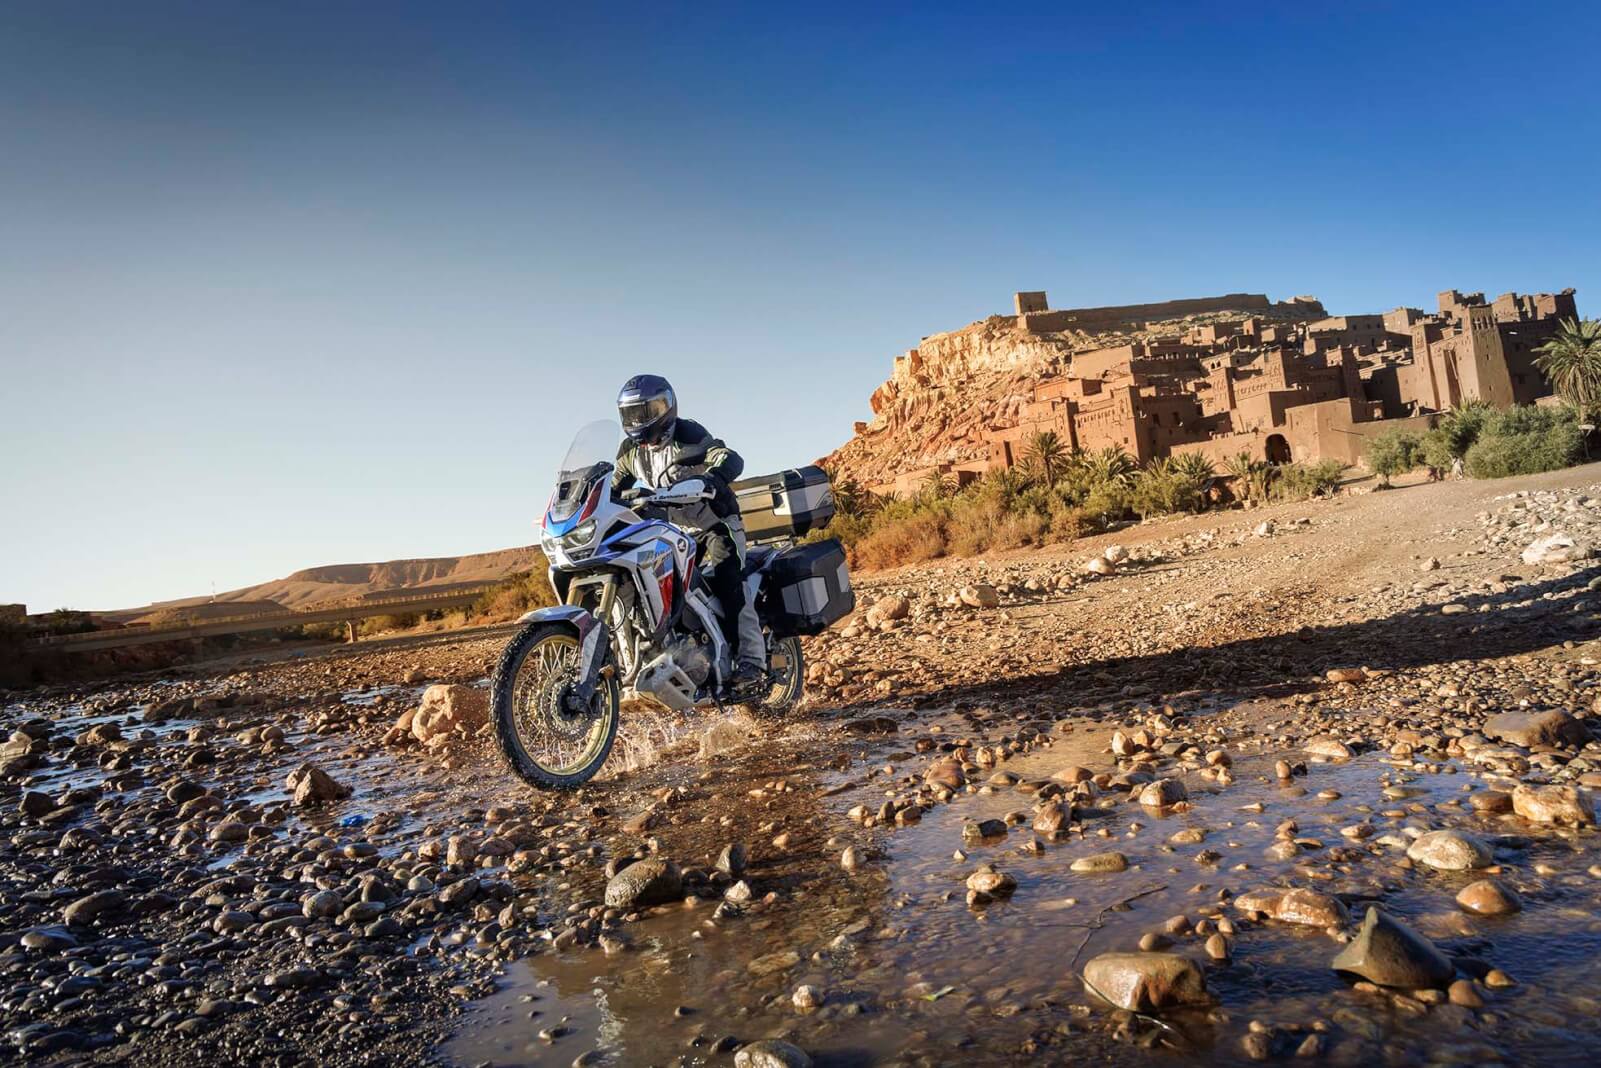 Especial – Honda Africa Twin Morocco Adventure Experience . aventuro, aqui ao lado